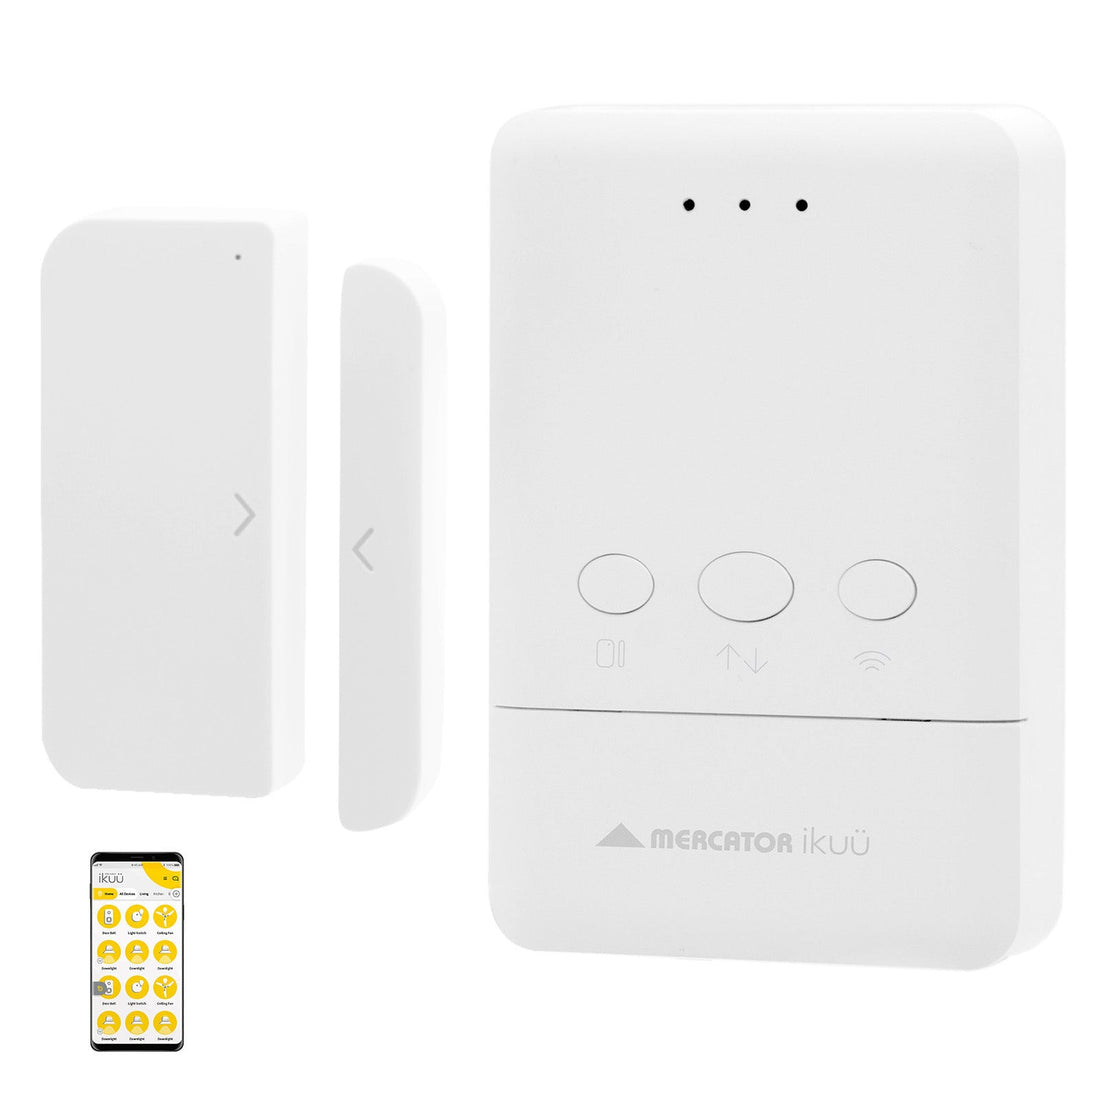 Ikuü Smart Wi-Fi Garage Door Control Kit